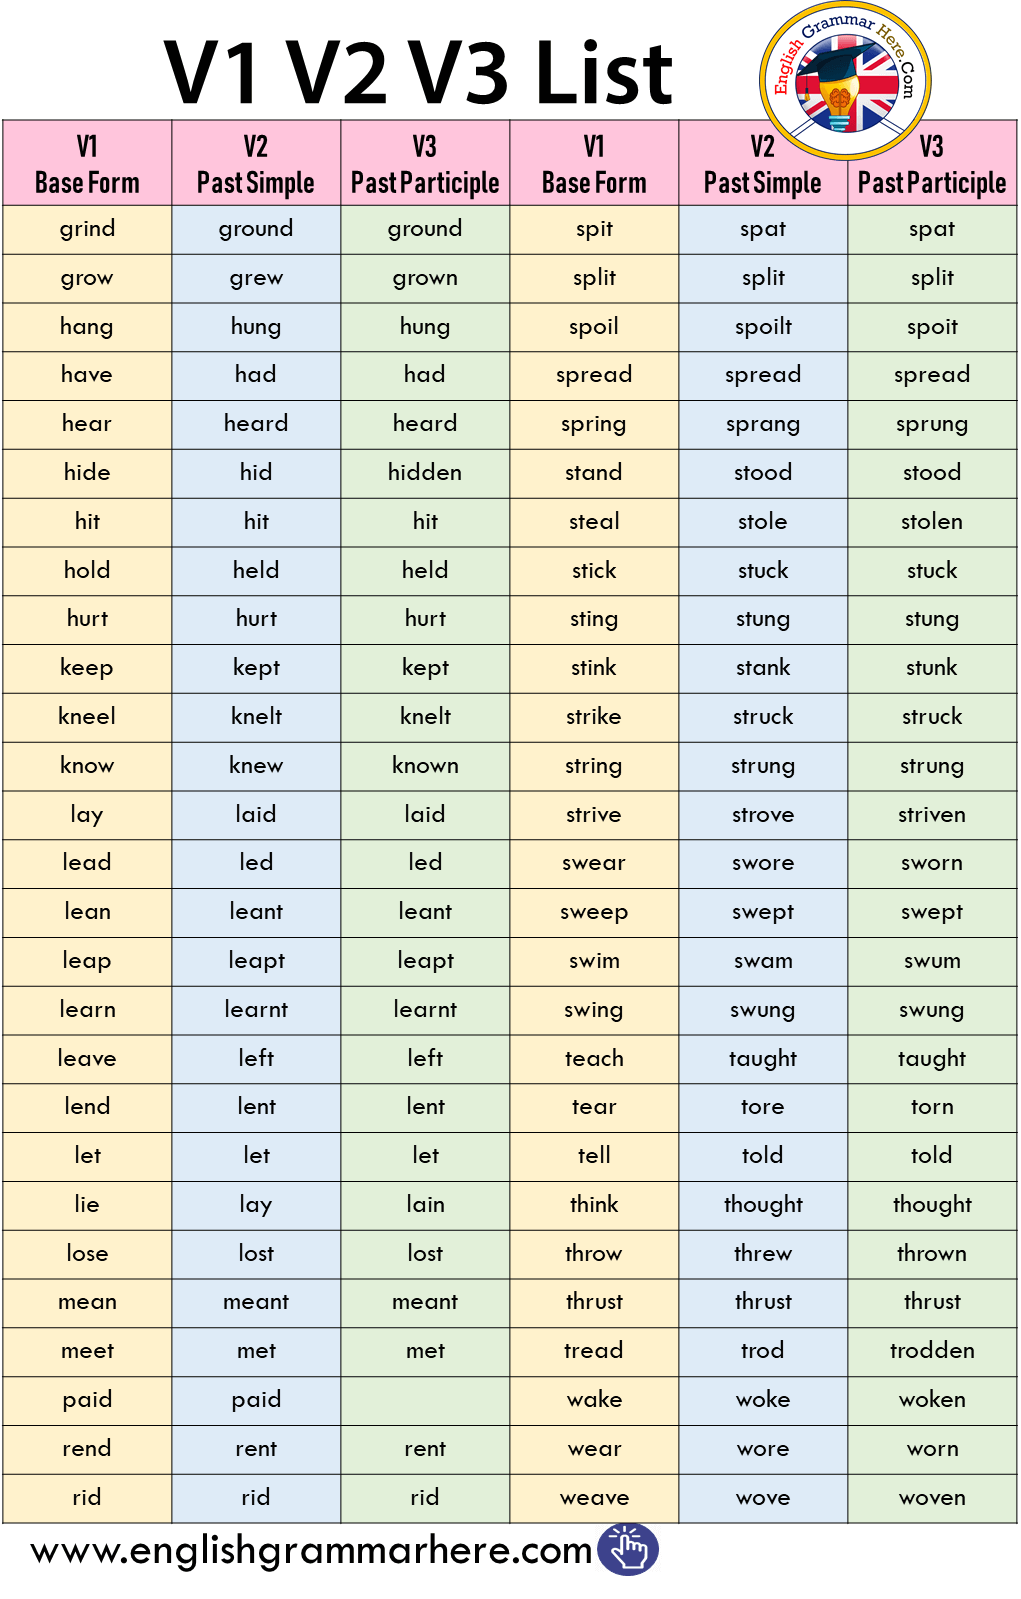 V1 V2 V3 List in English - English Grammar Here